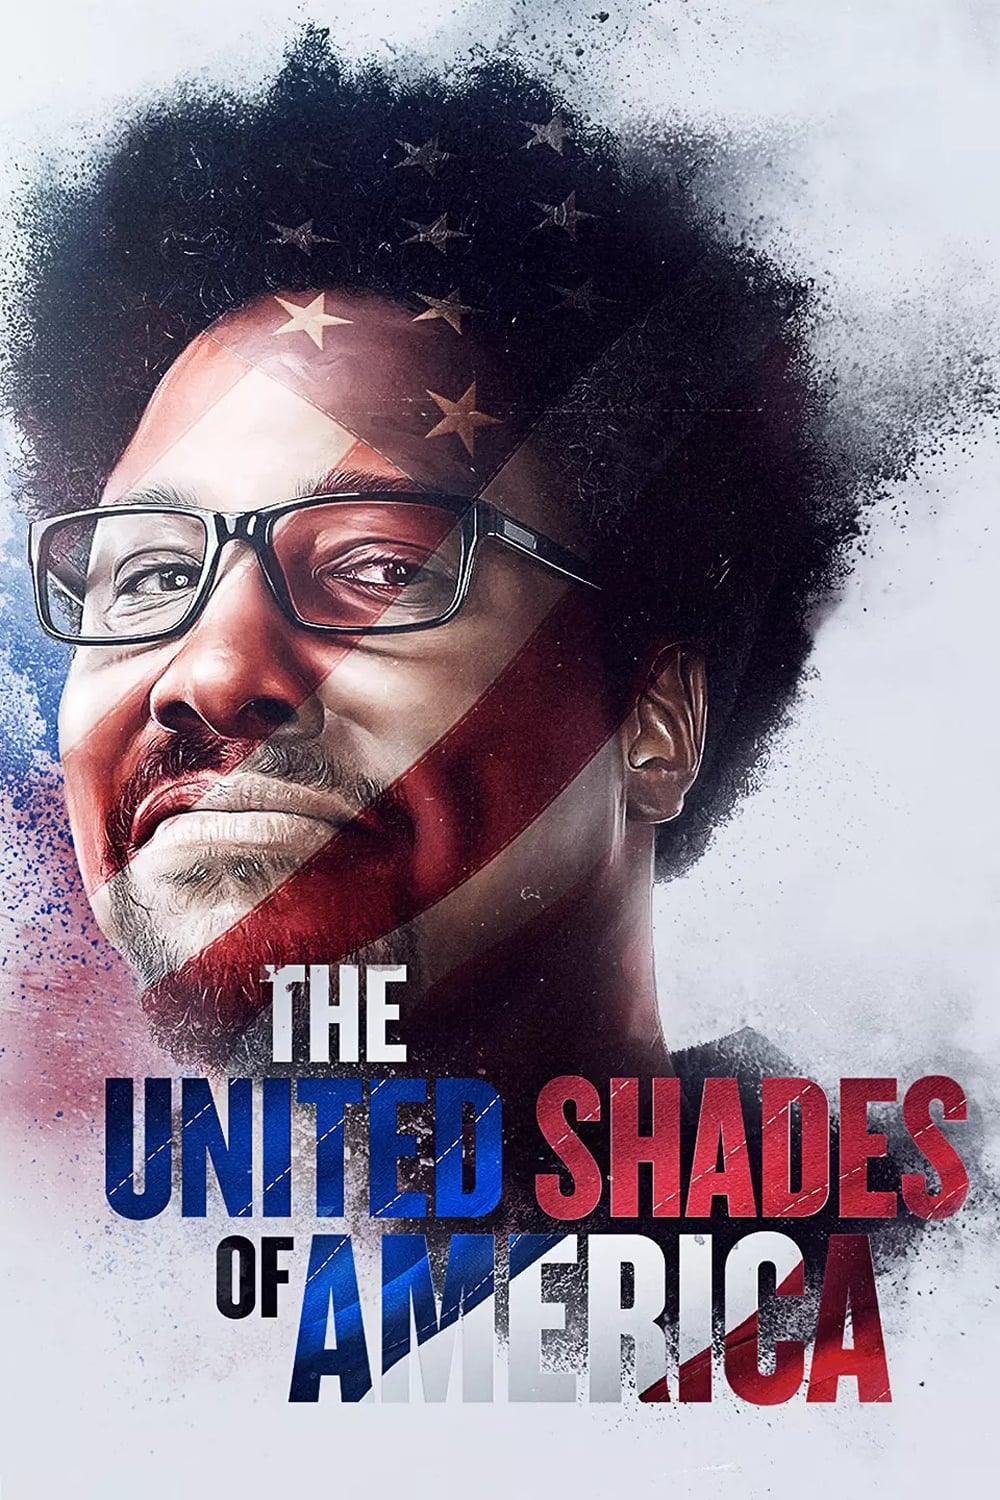 United Shades of America (2016)